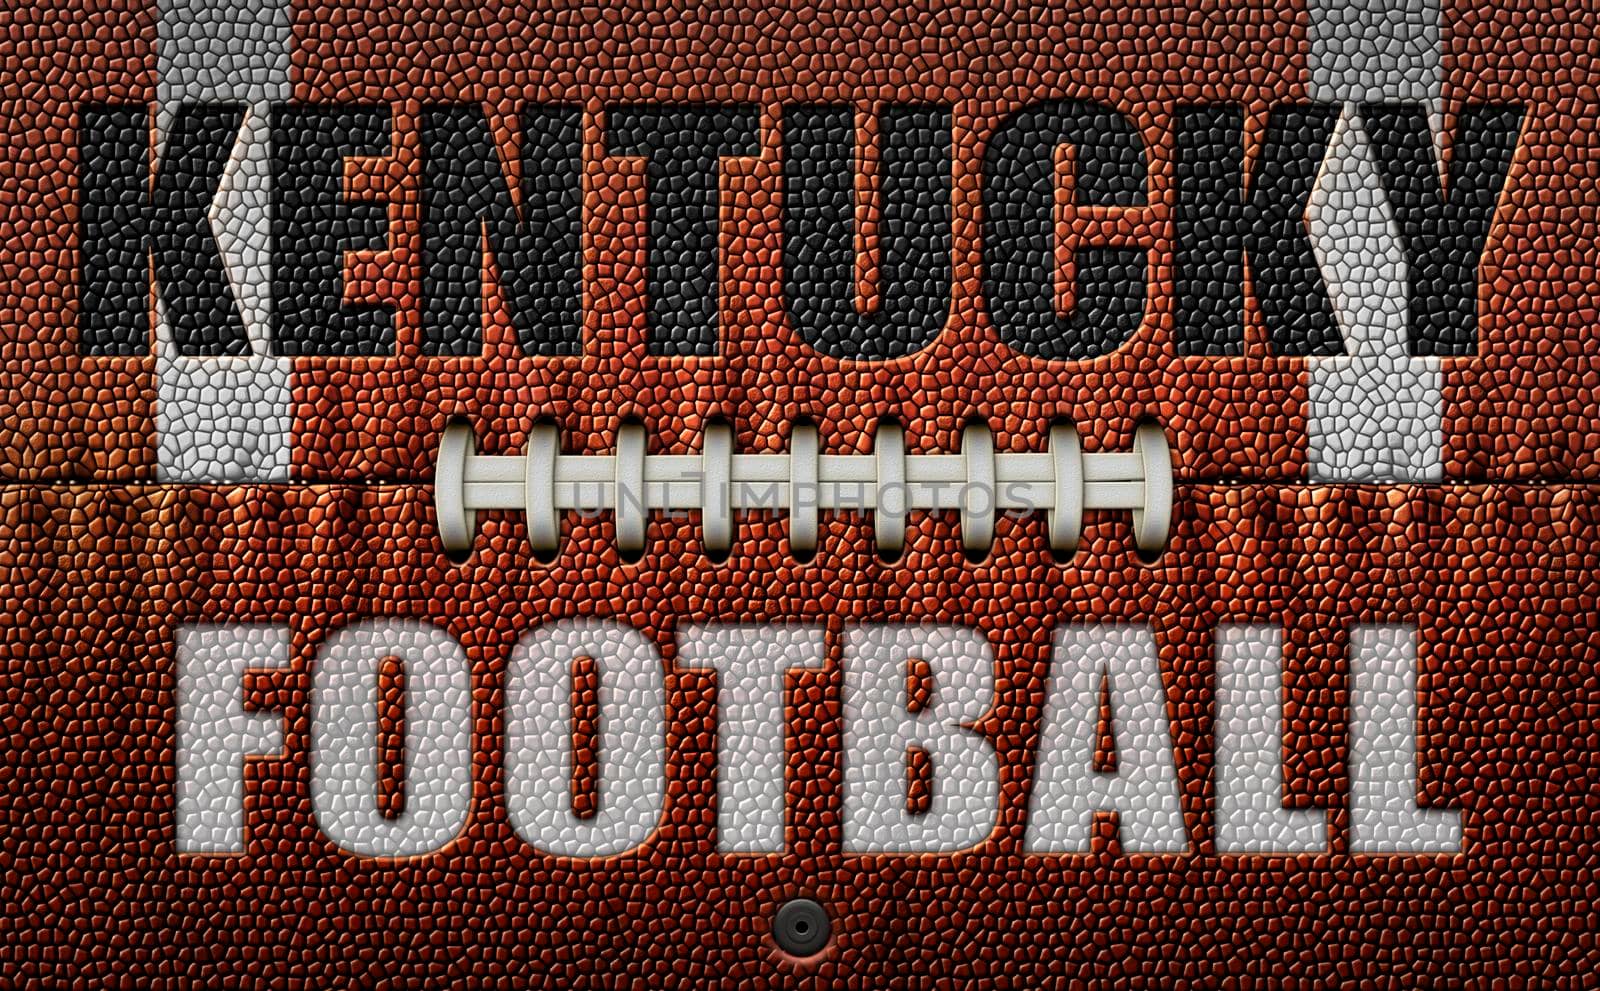 Kentucky Football Text on a Flattened Football by jimlarkin